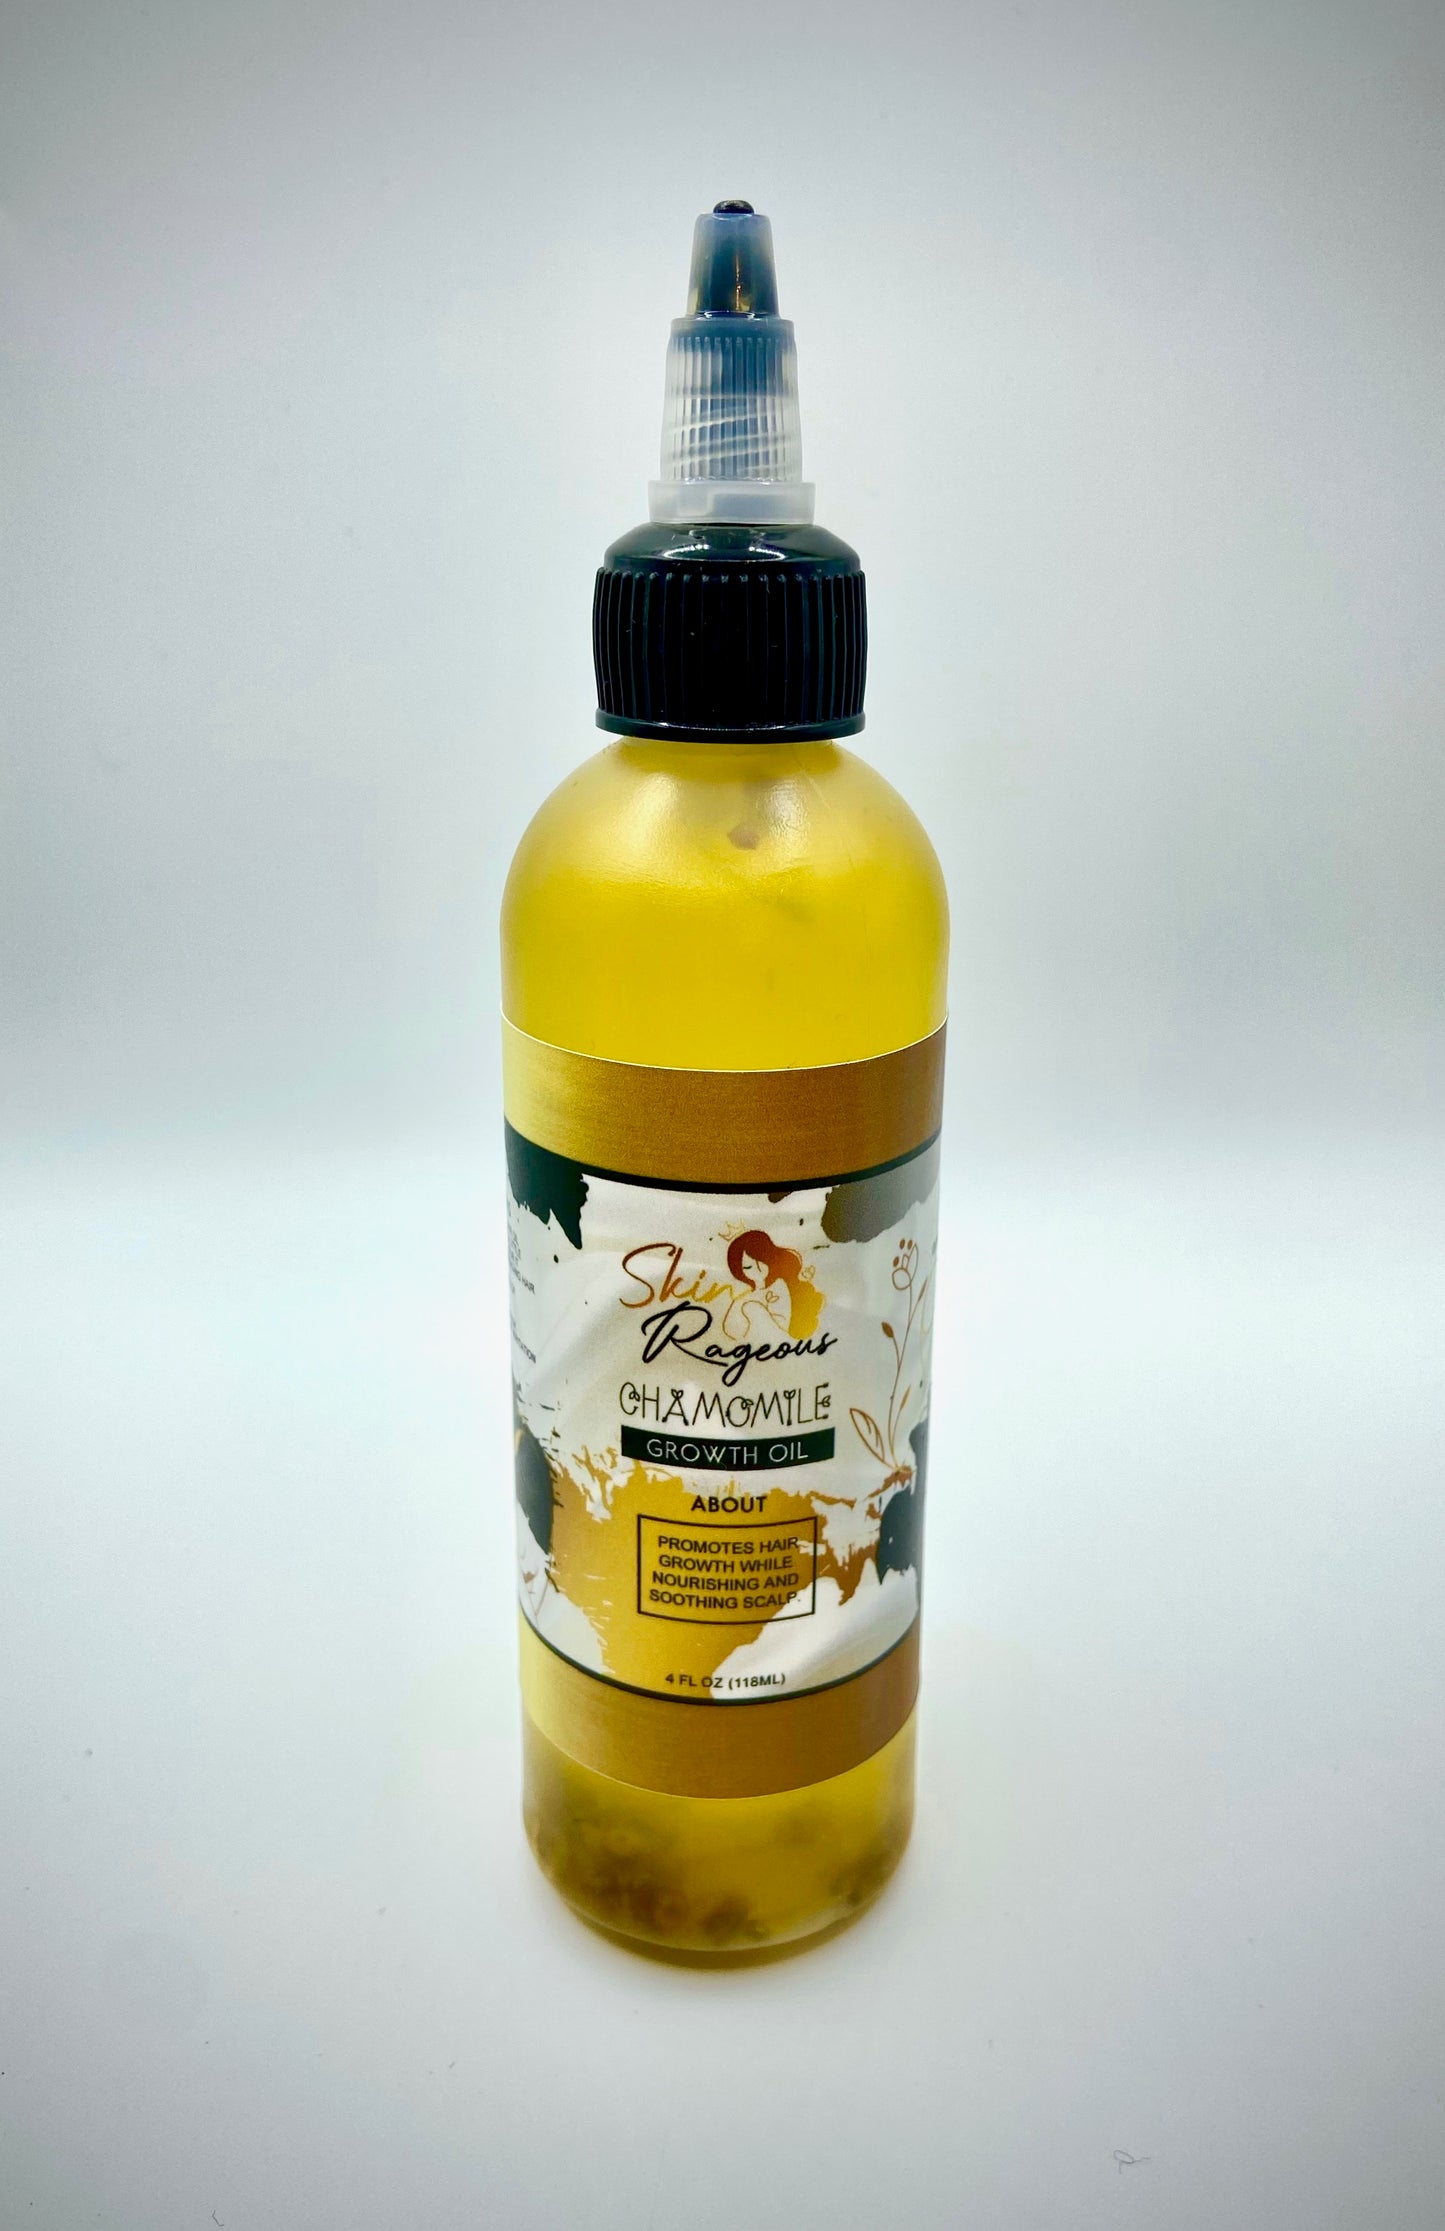 CHAMOMILE HAIR GROWTH OIL  4OZ - skinrageous chamomile-hair-growth-oil-4oz, 